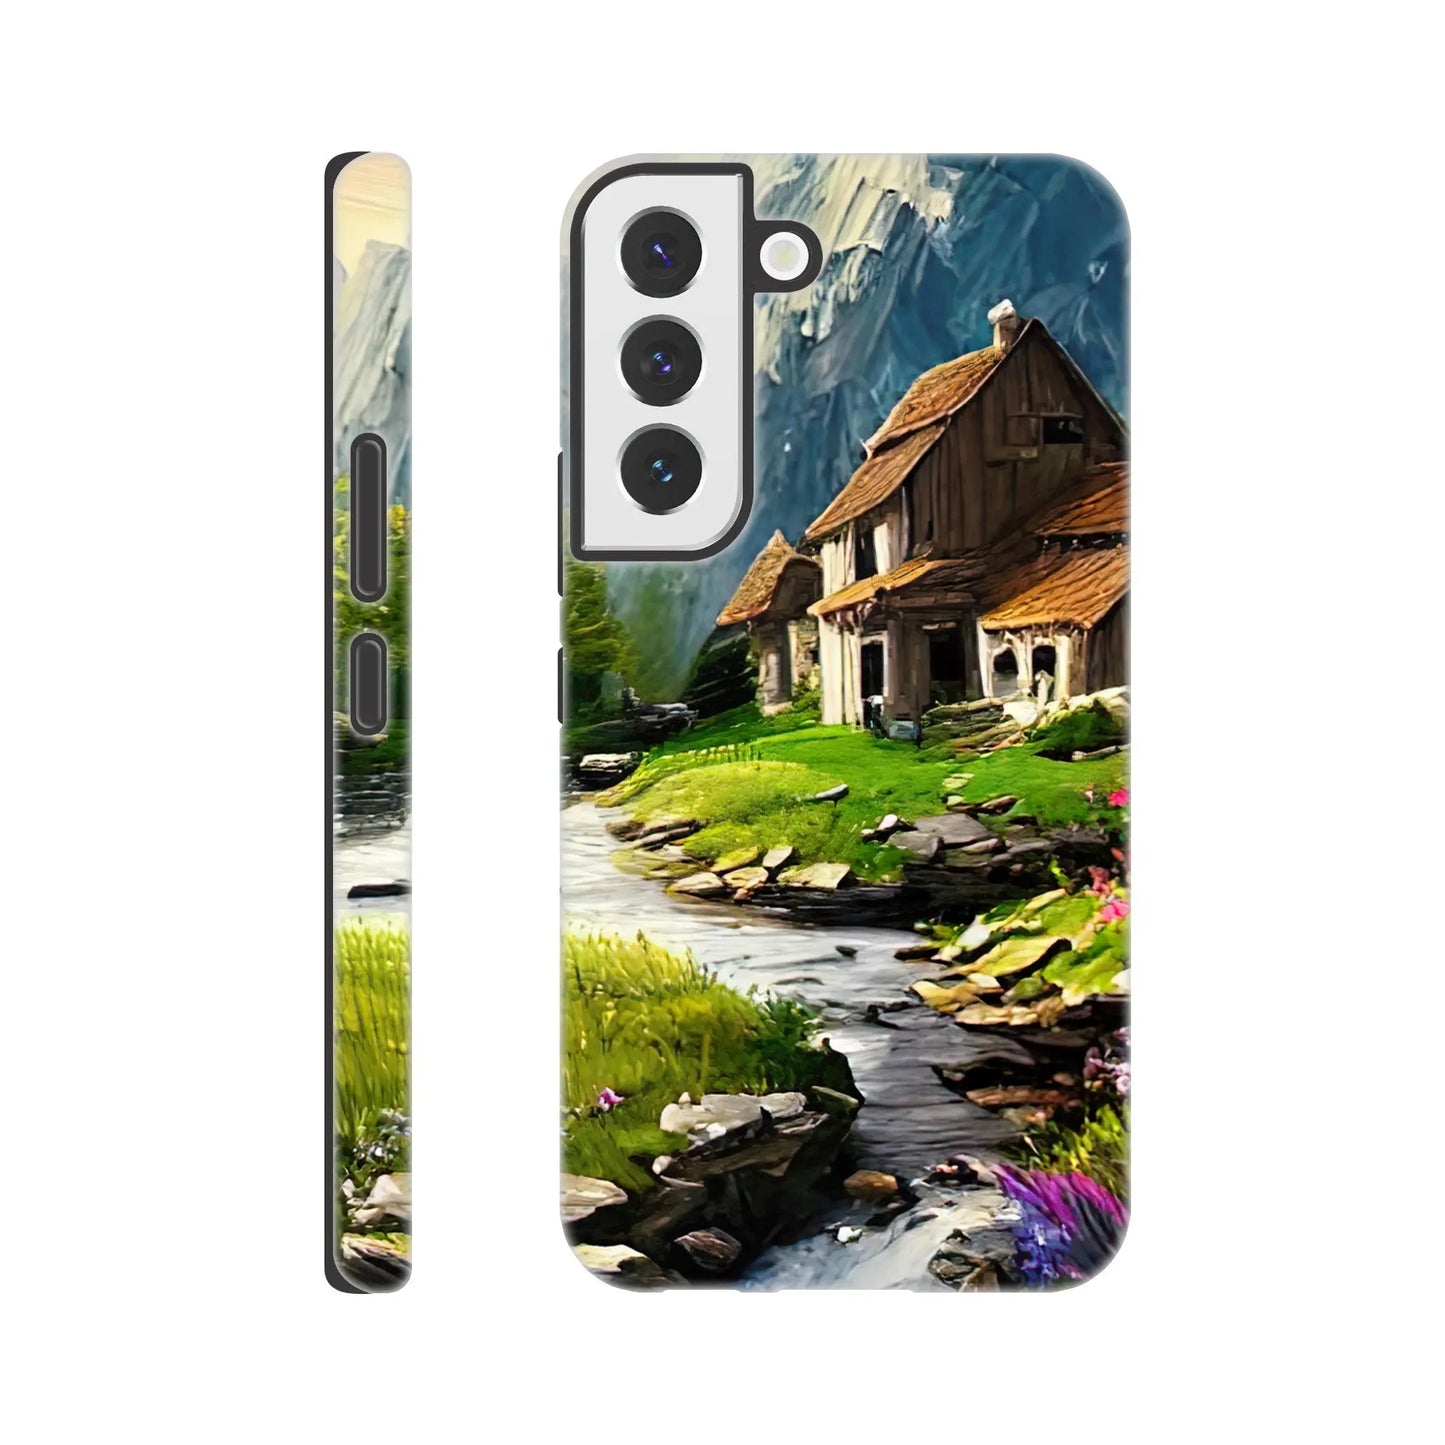 Smartphone-Hülle "Hart" - Berglandschaft - Malerischer Stil, KI-Kunst RolConArt, Landschaften, Galaxy-S22